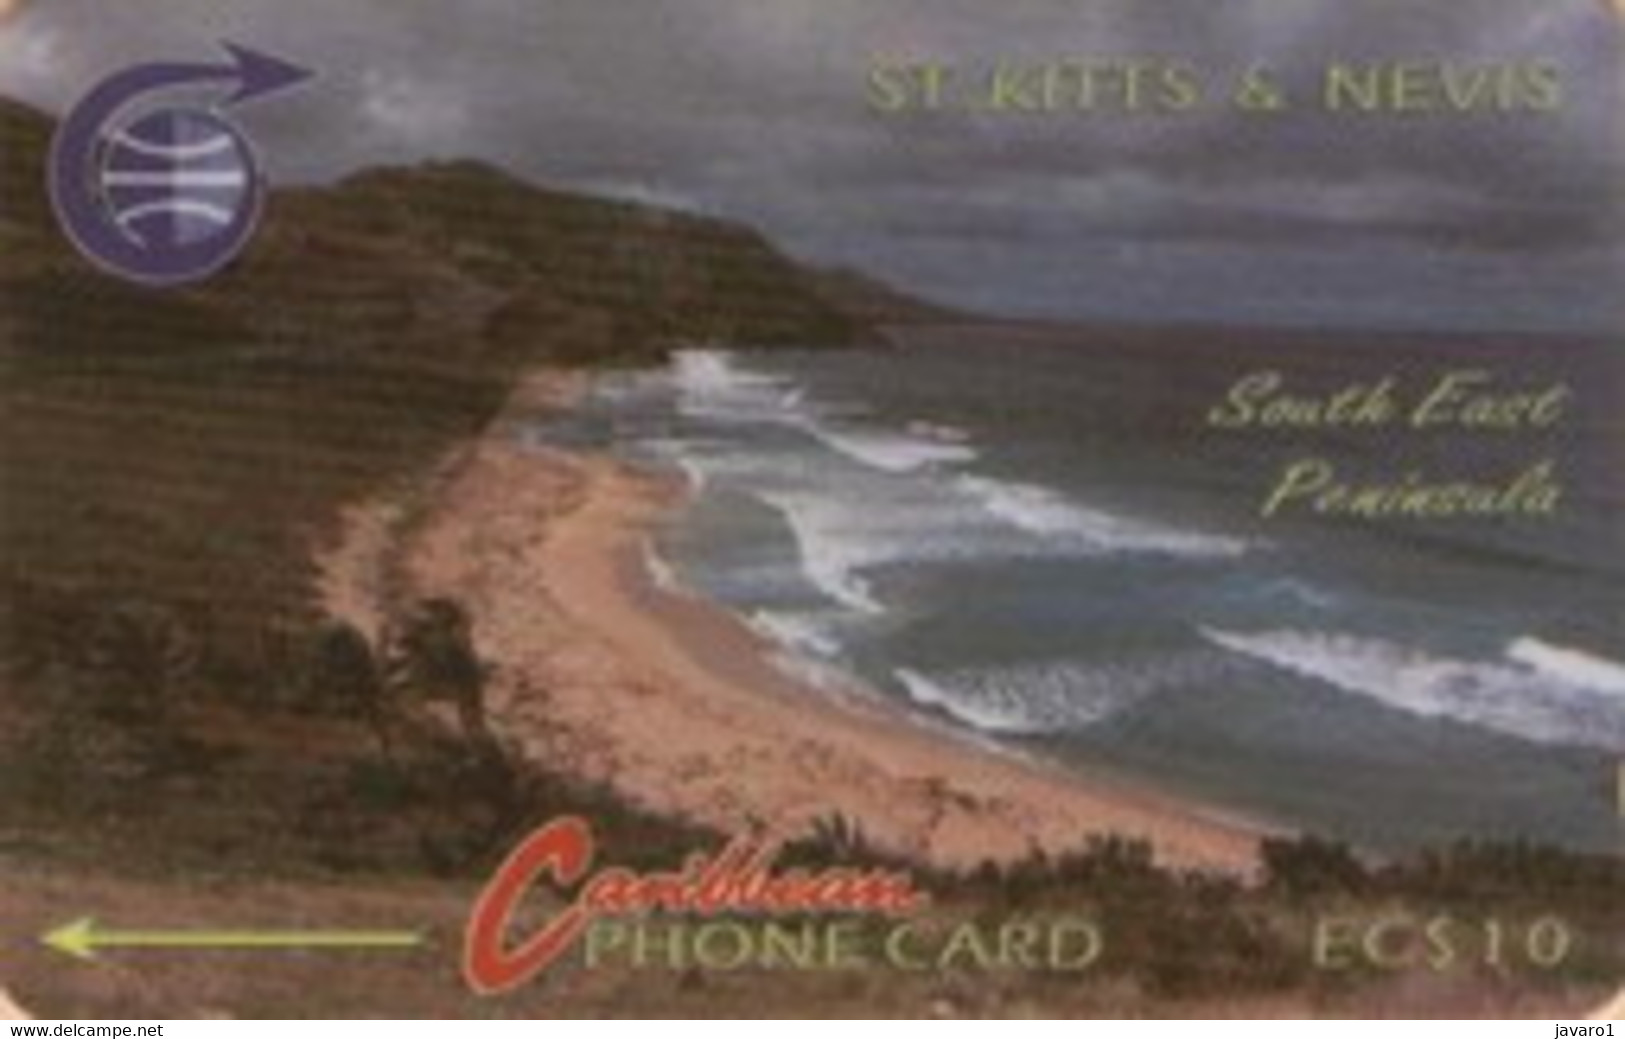 STKITTS : 003B EC$10 South East Peninsula 3CSKB USED - St. Kitts & Nevis